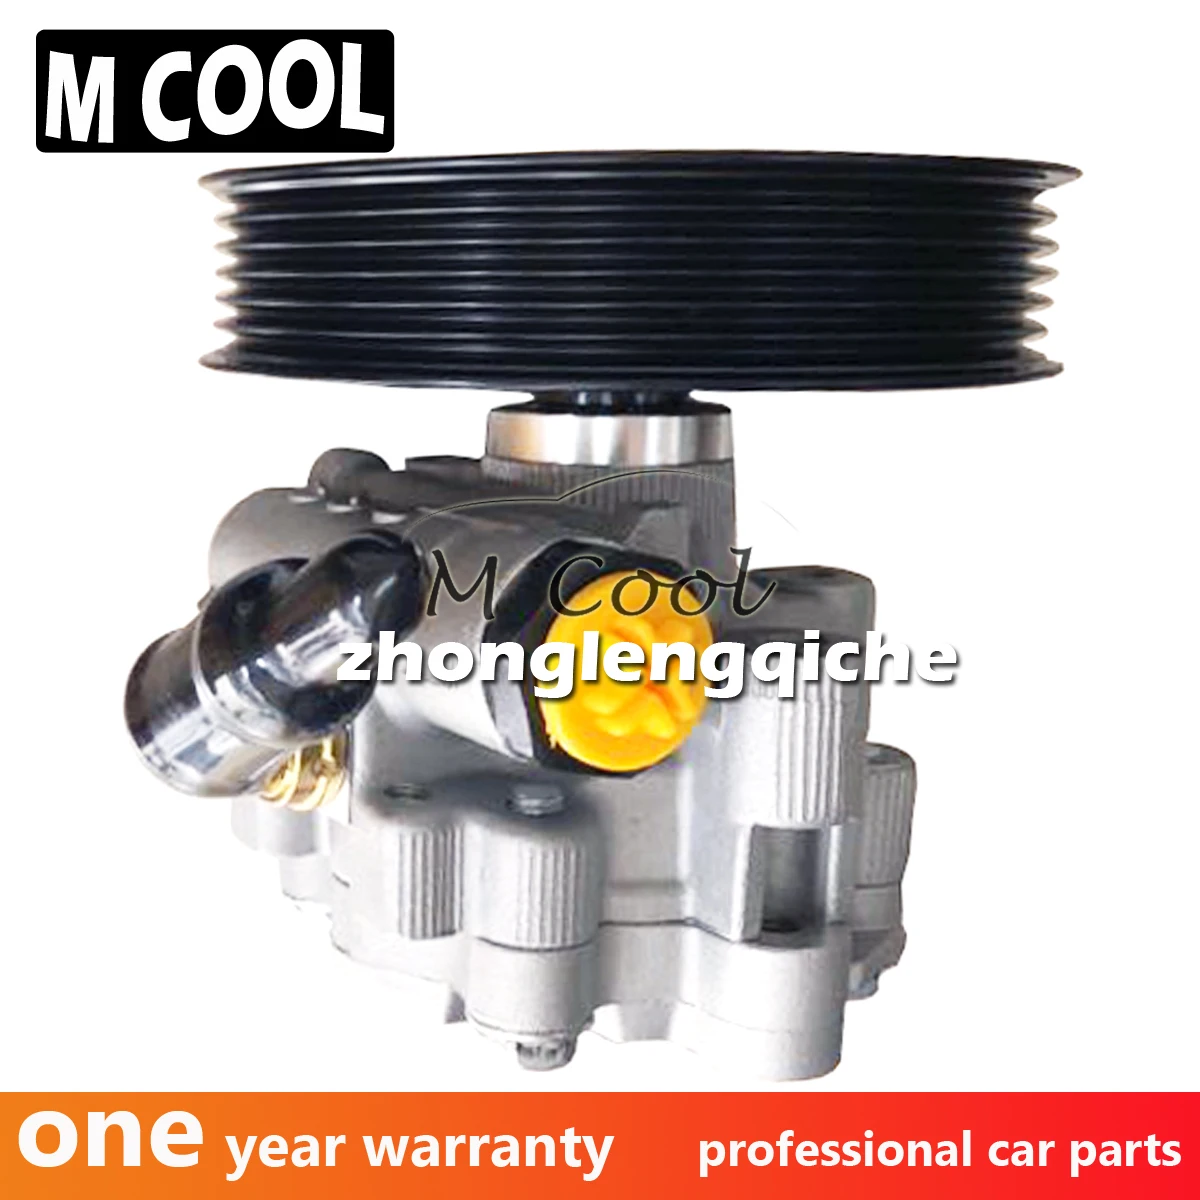 

MCOOL New Power Steering Pump For Chevrolet Captiva C140 Opel Antara C145 2.0 2.2 2008-2015 4819561 95476164